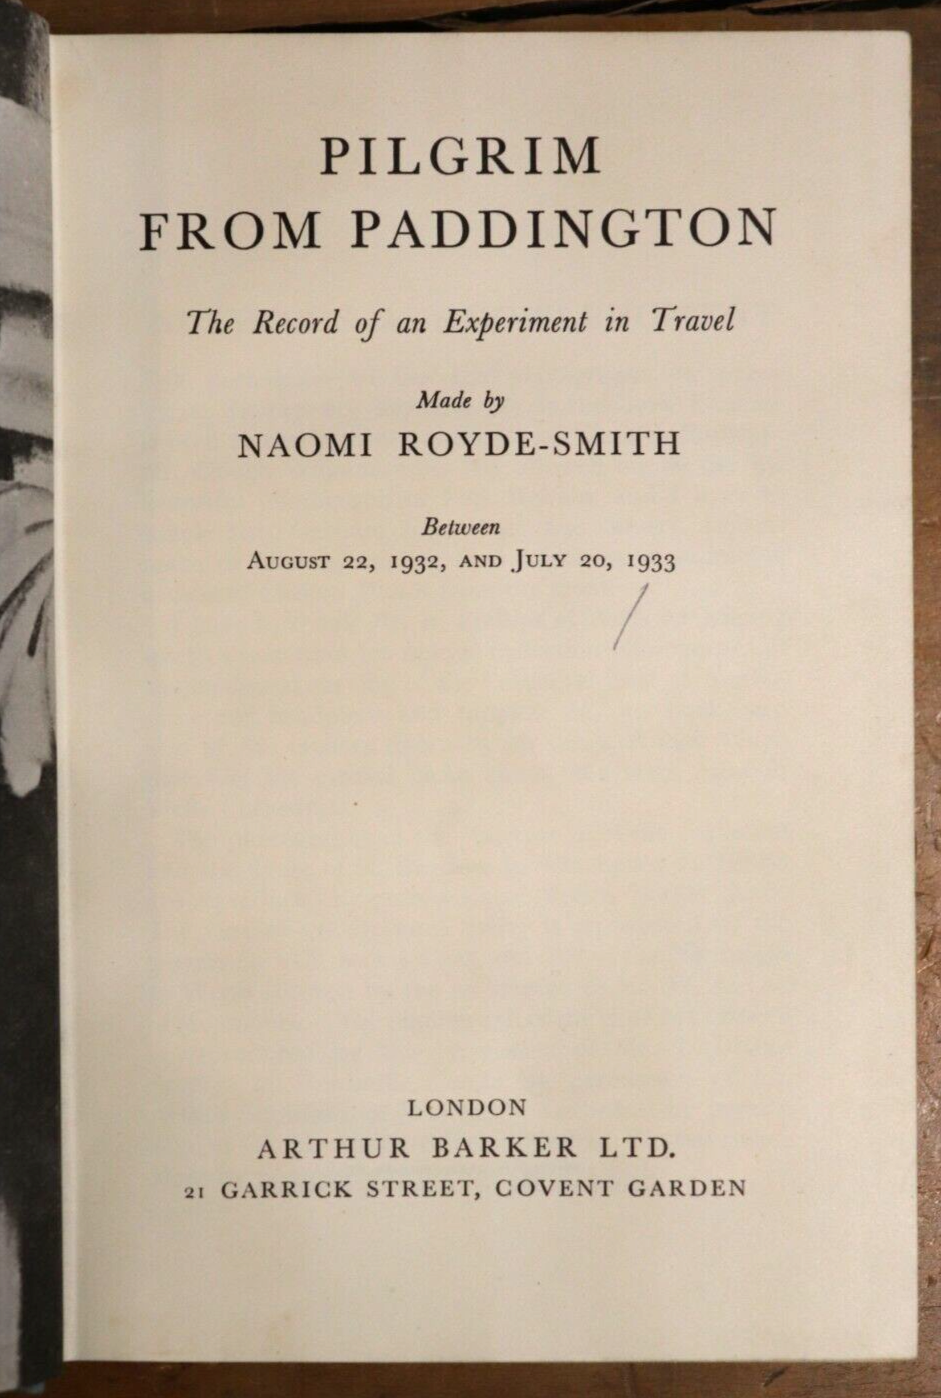 1933 Pilgrim From Paddington by Naomi Royde-Smith Antique Travel Book - 0